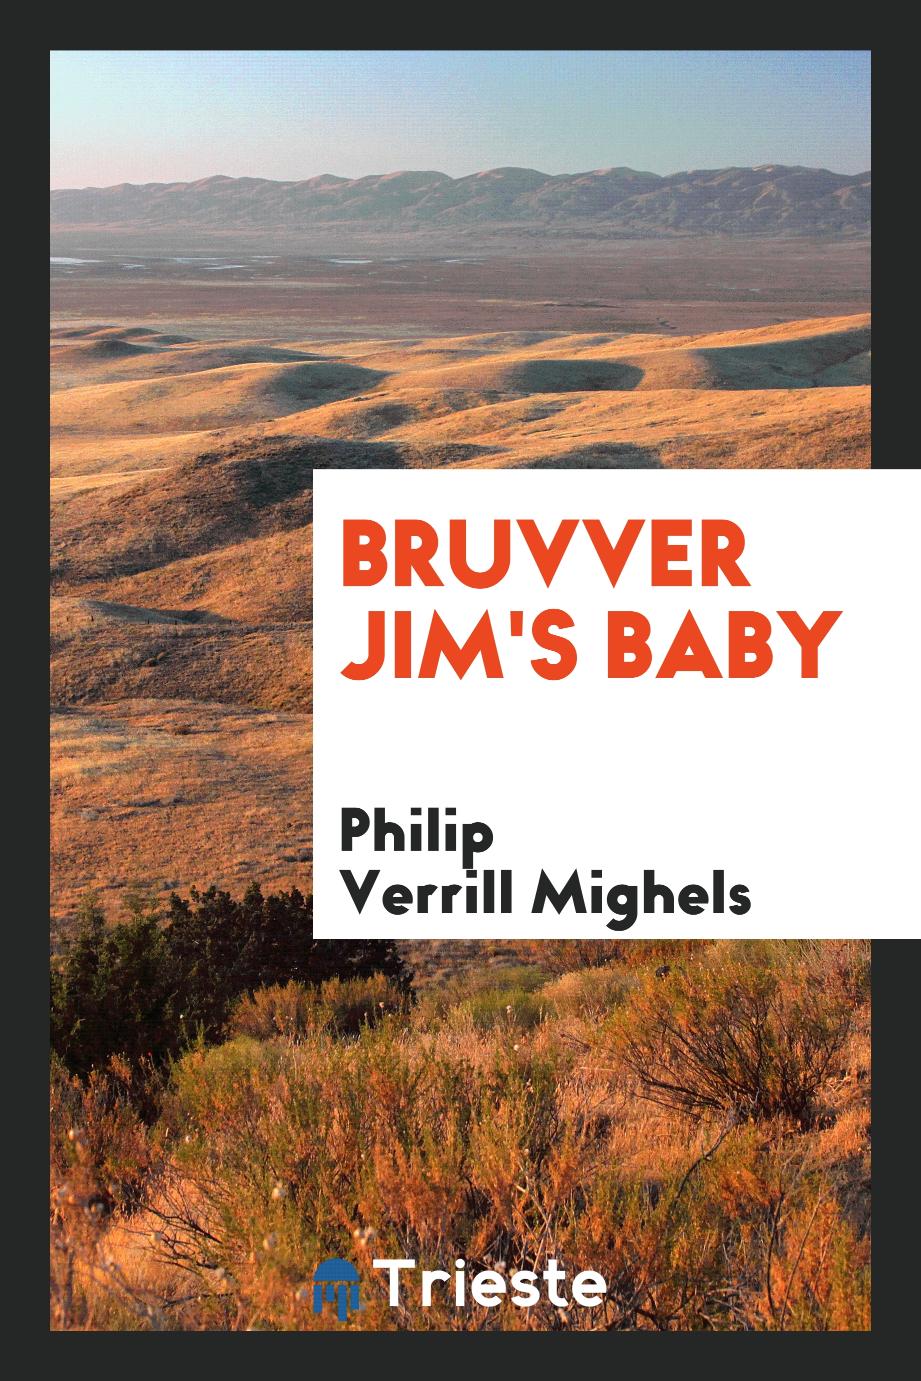 Bruvver Jim's baby